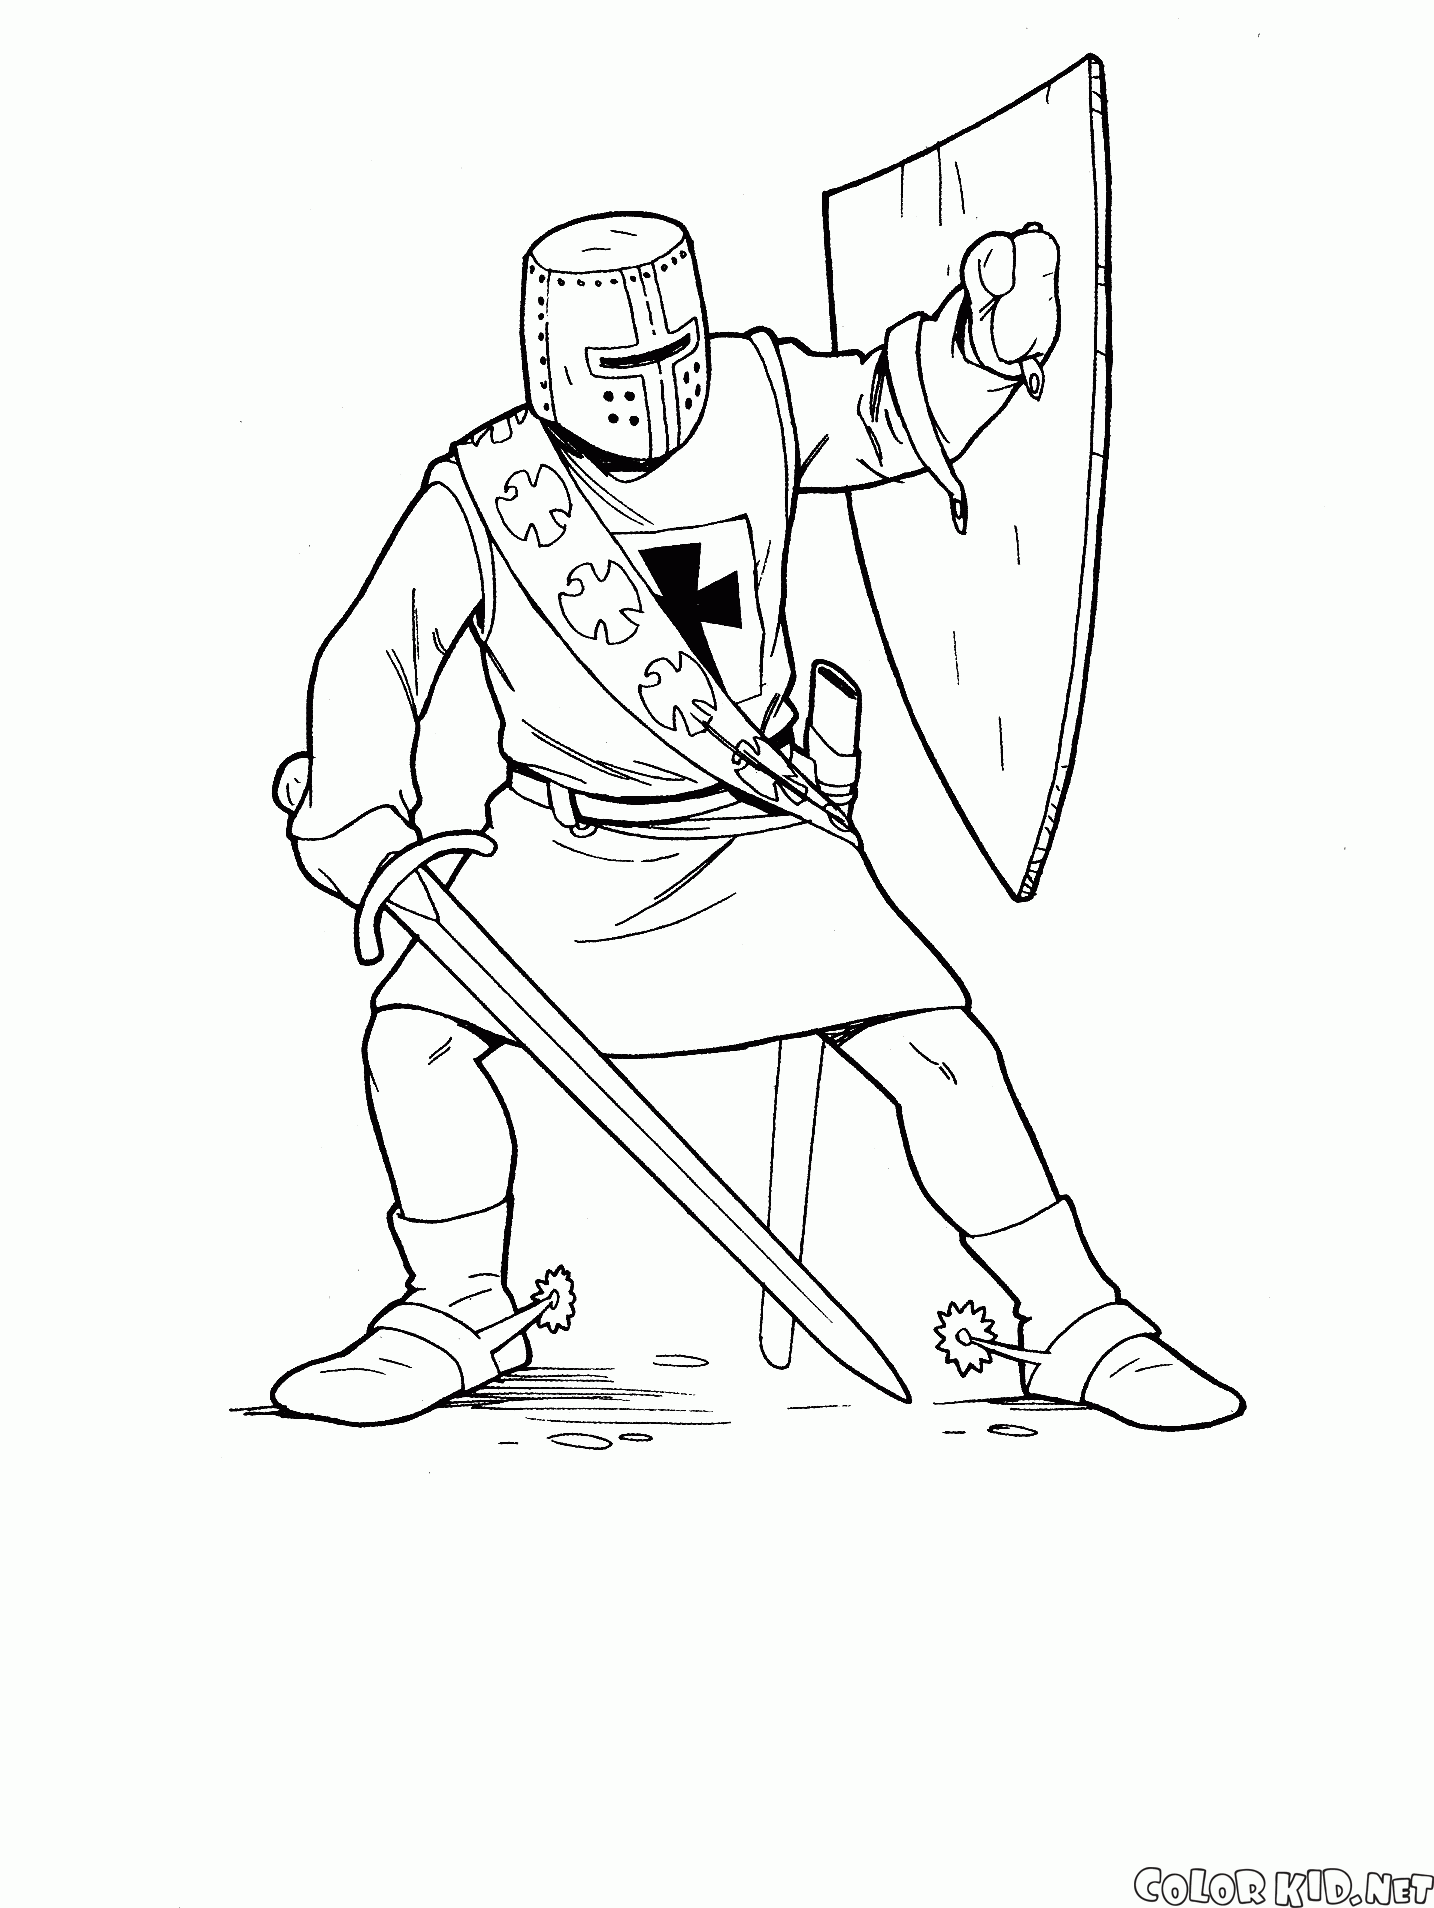 Coloring page - Knight Crusade